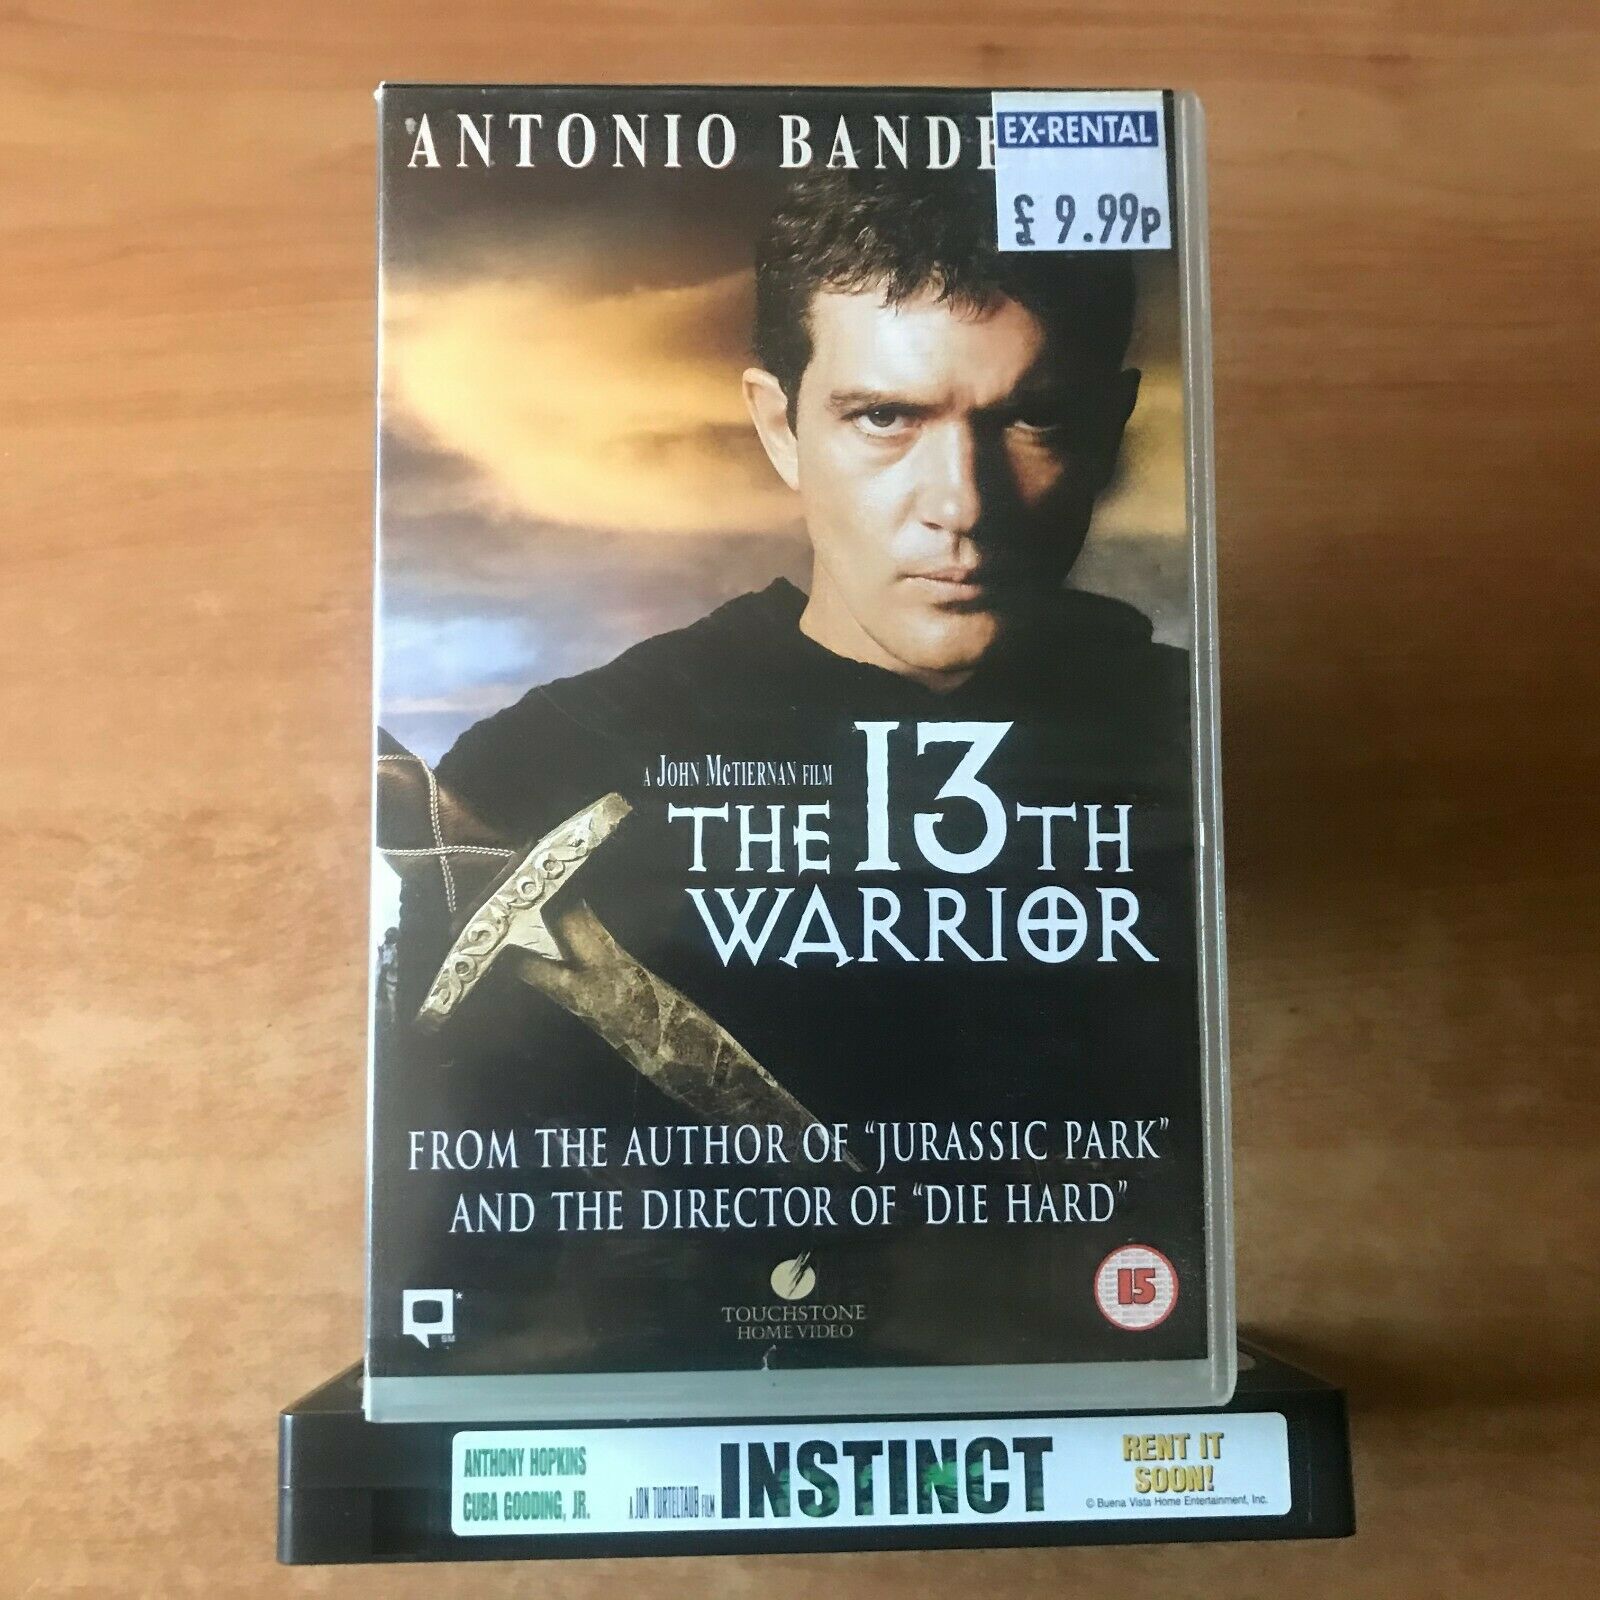 The 13th Warrior; [Michael Crichton] Action - Large Box - Antonio Banderas - VHS-